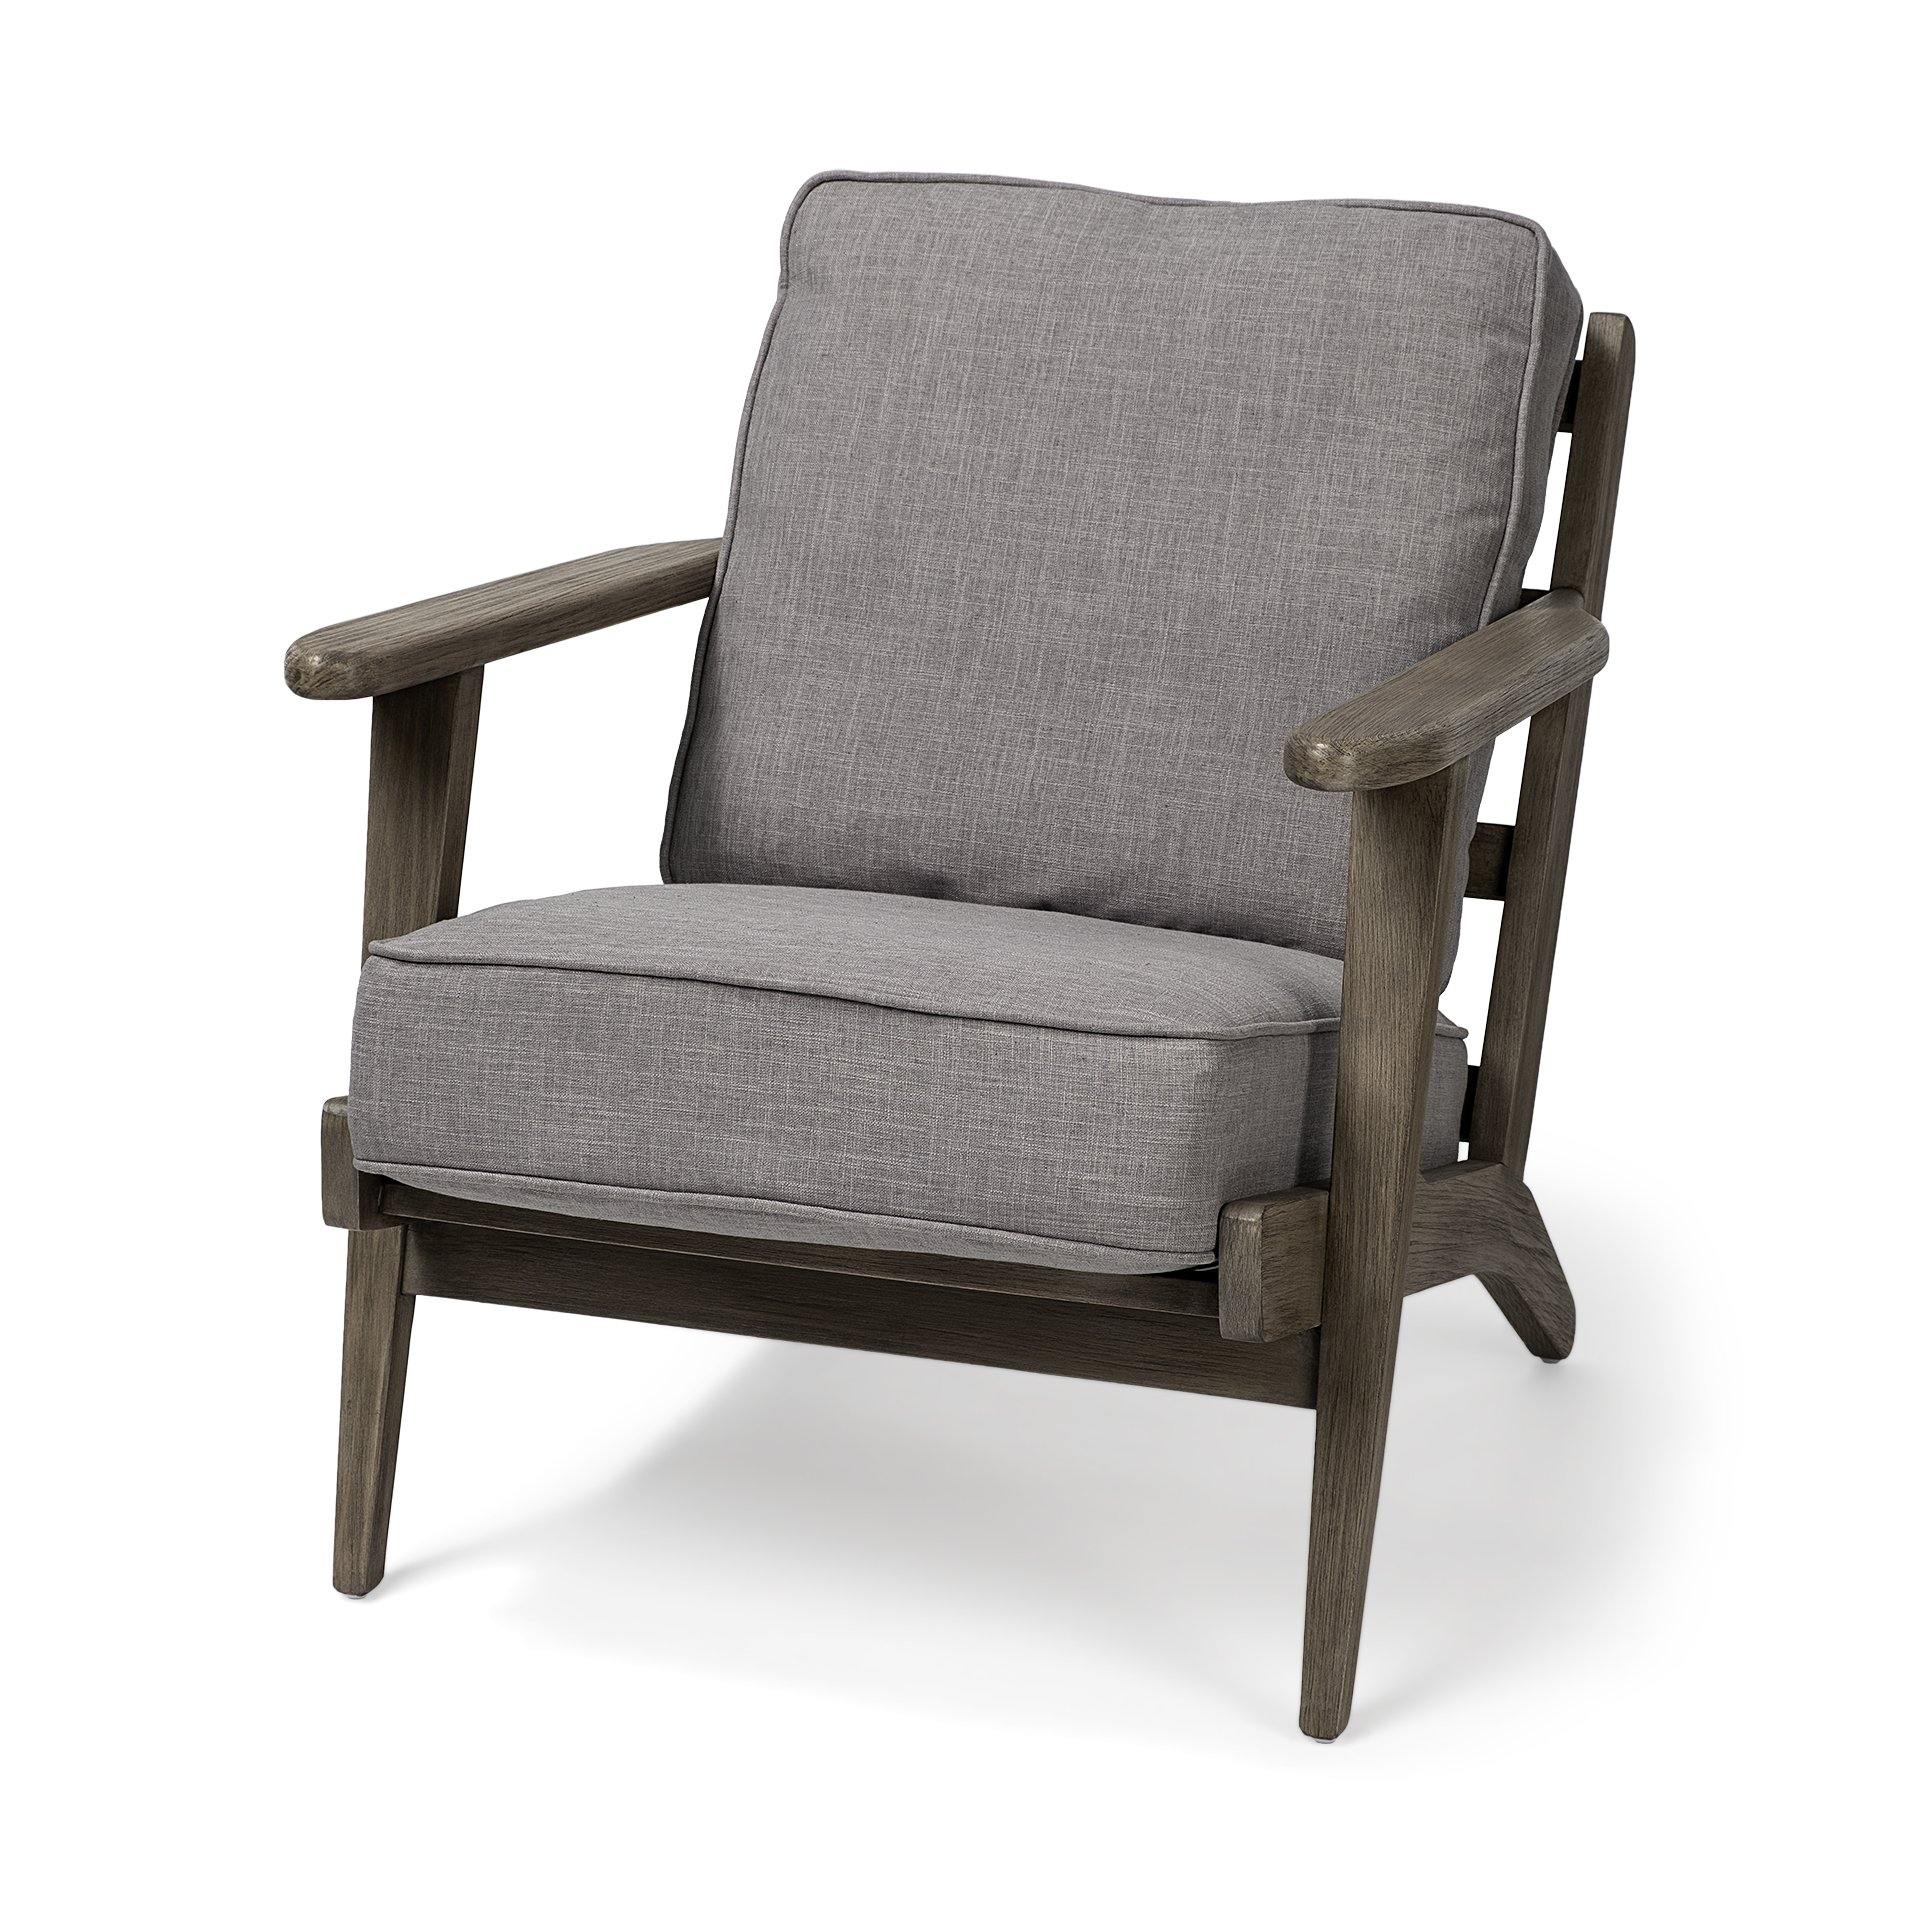 Olympus Chair, Flint Grey - Reimagine Designs - Armchair, new